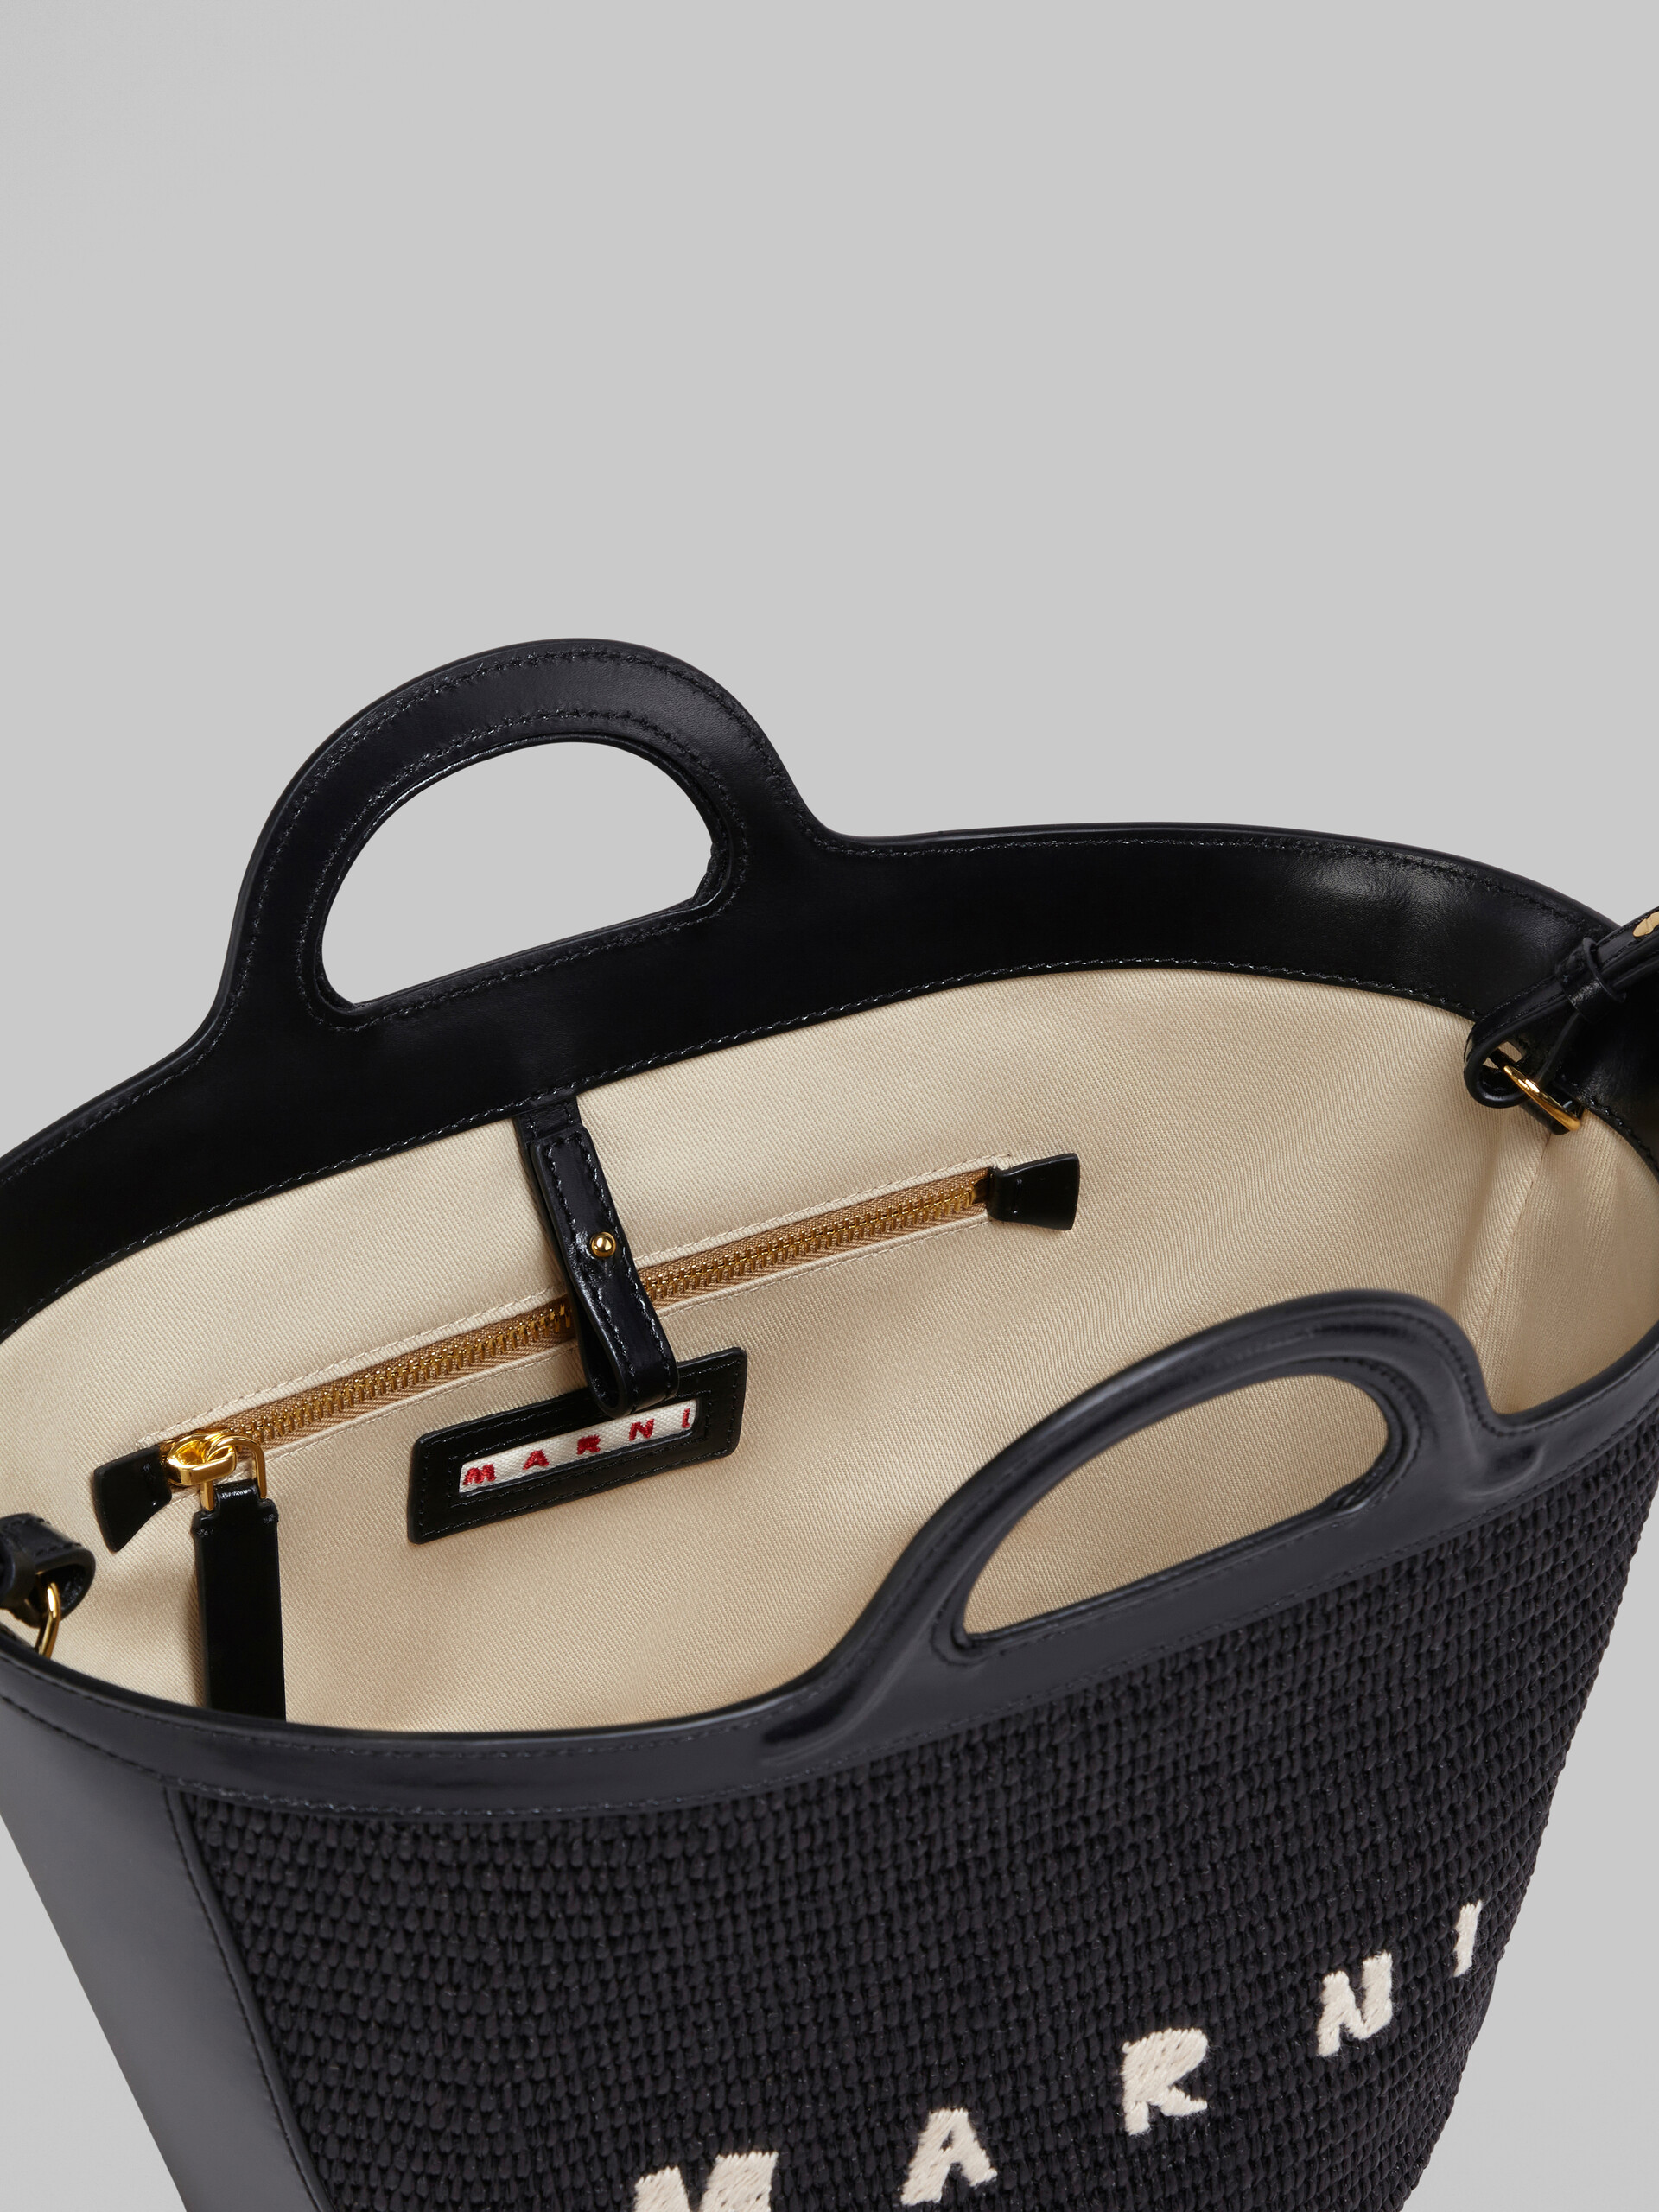 Tropicalia Small Bag in brown leather and raffia-effect fabric - Handbag - Image 4